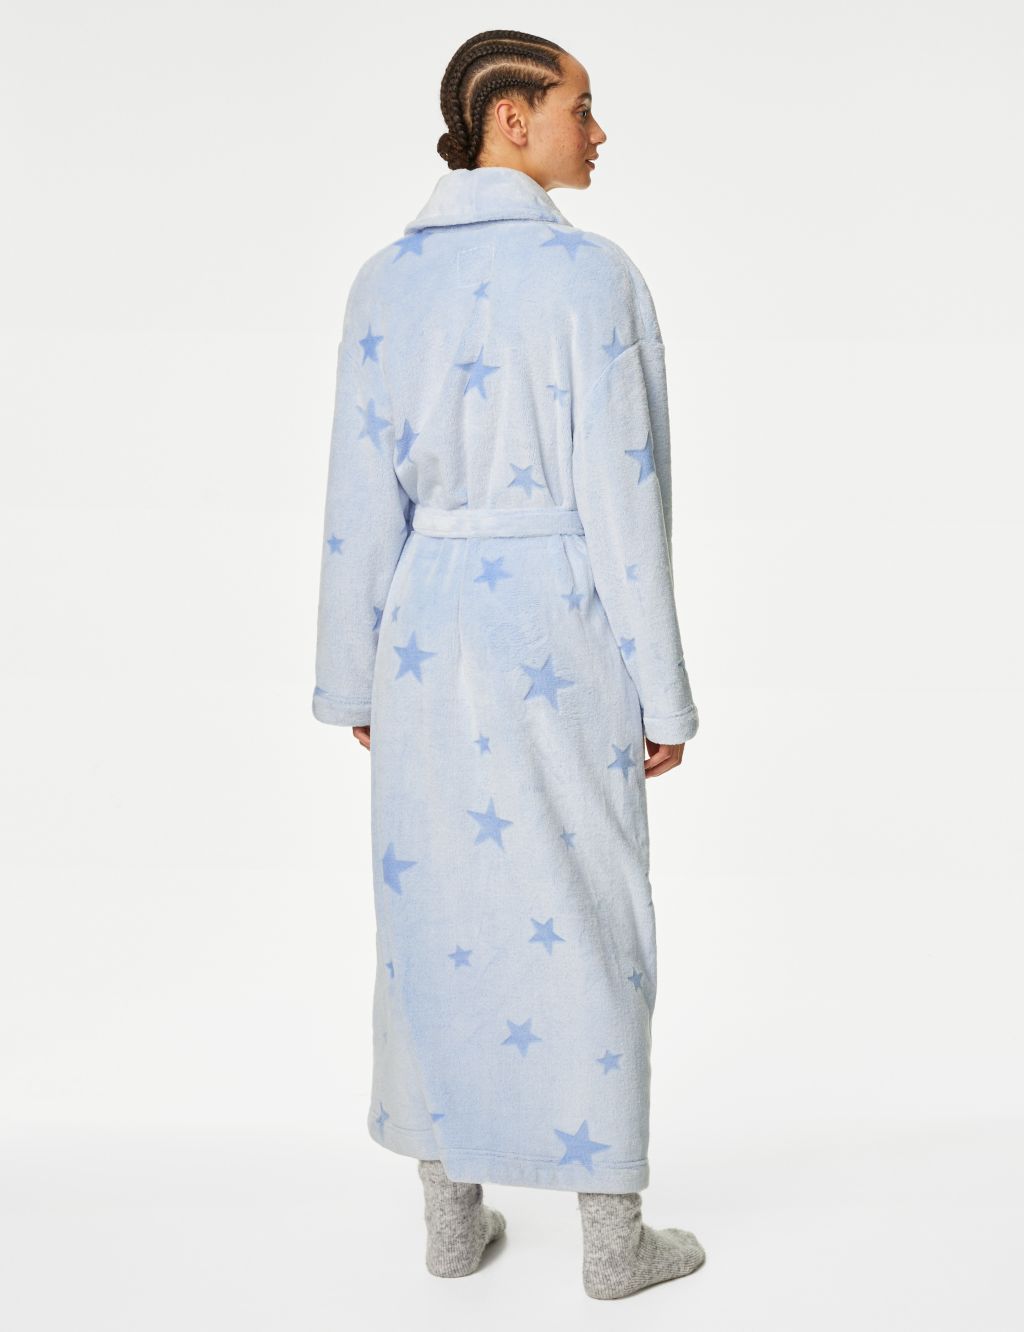 Fleece Star Print Dressing Gown image 4